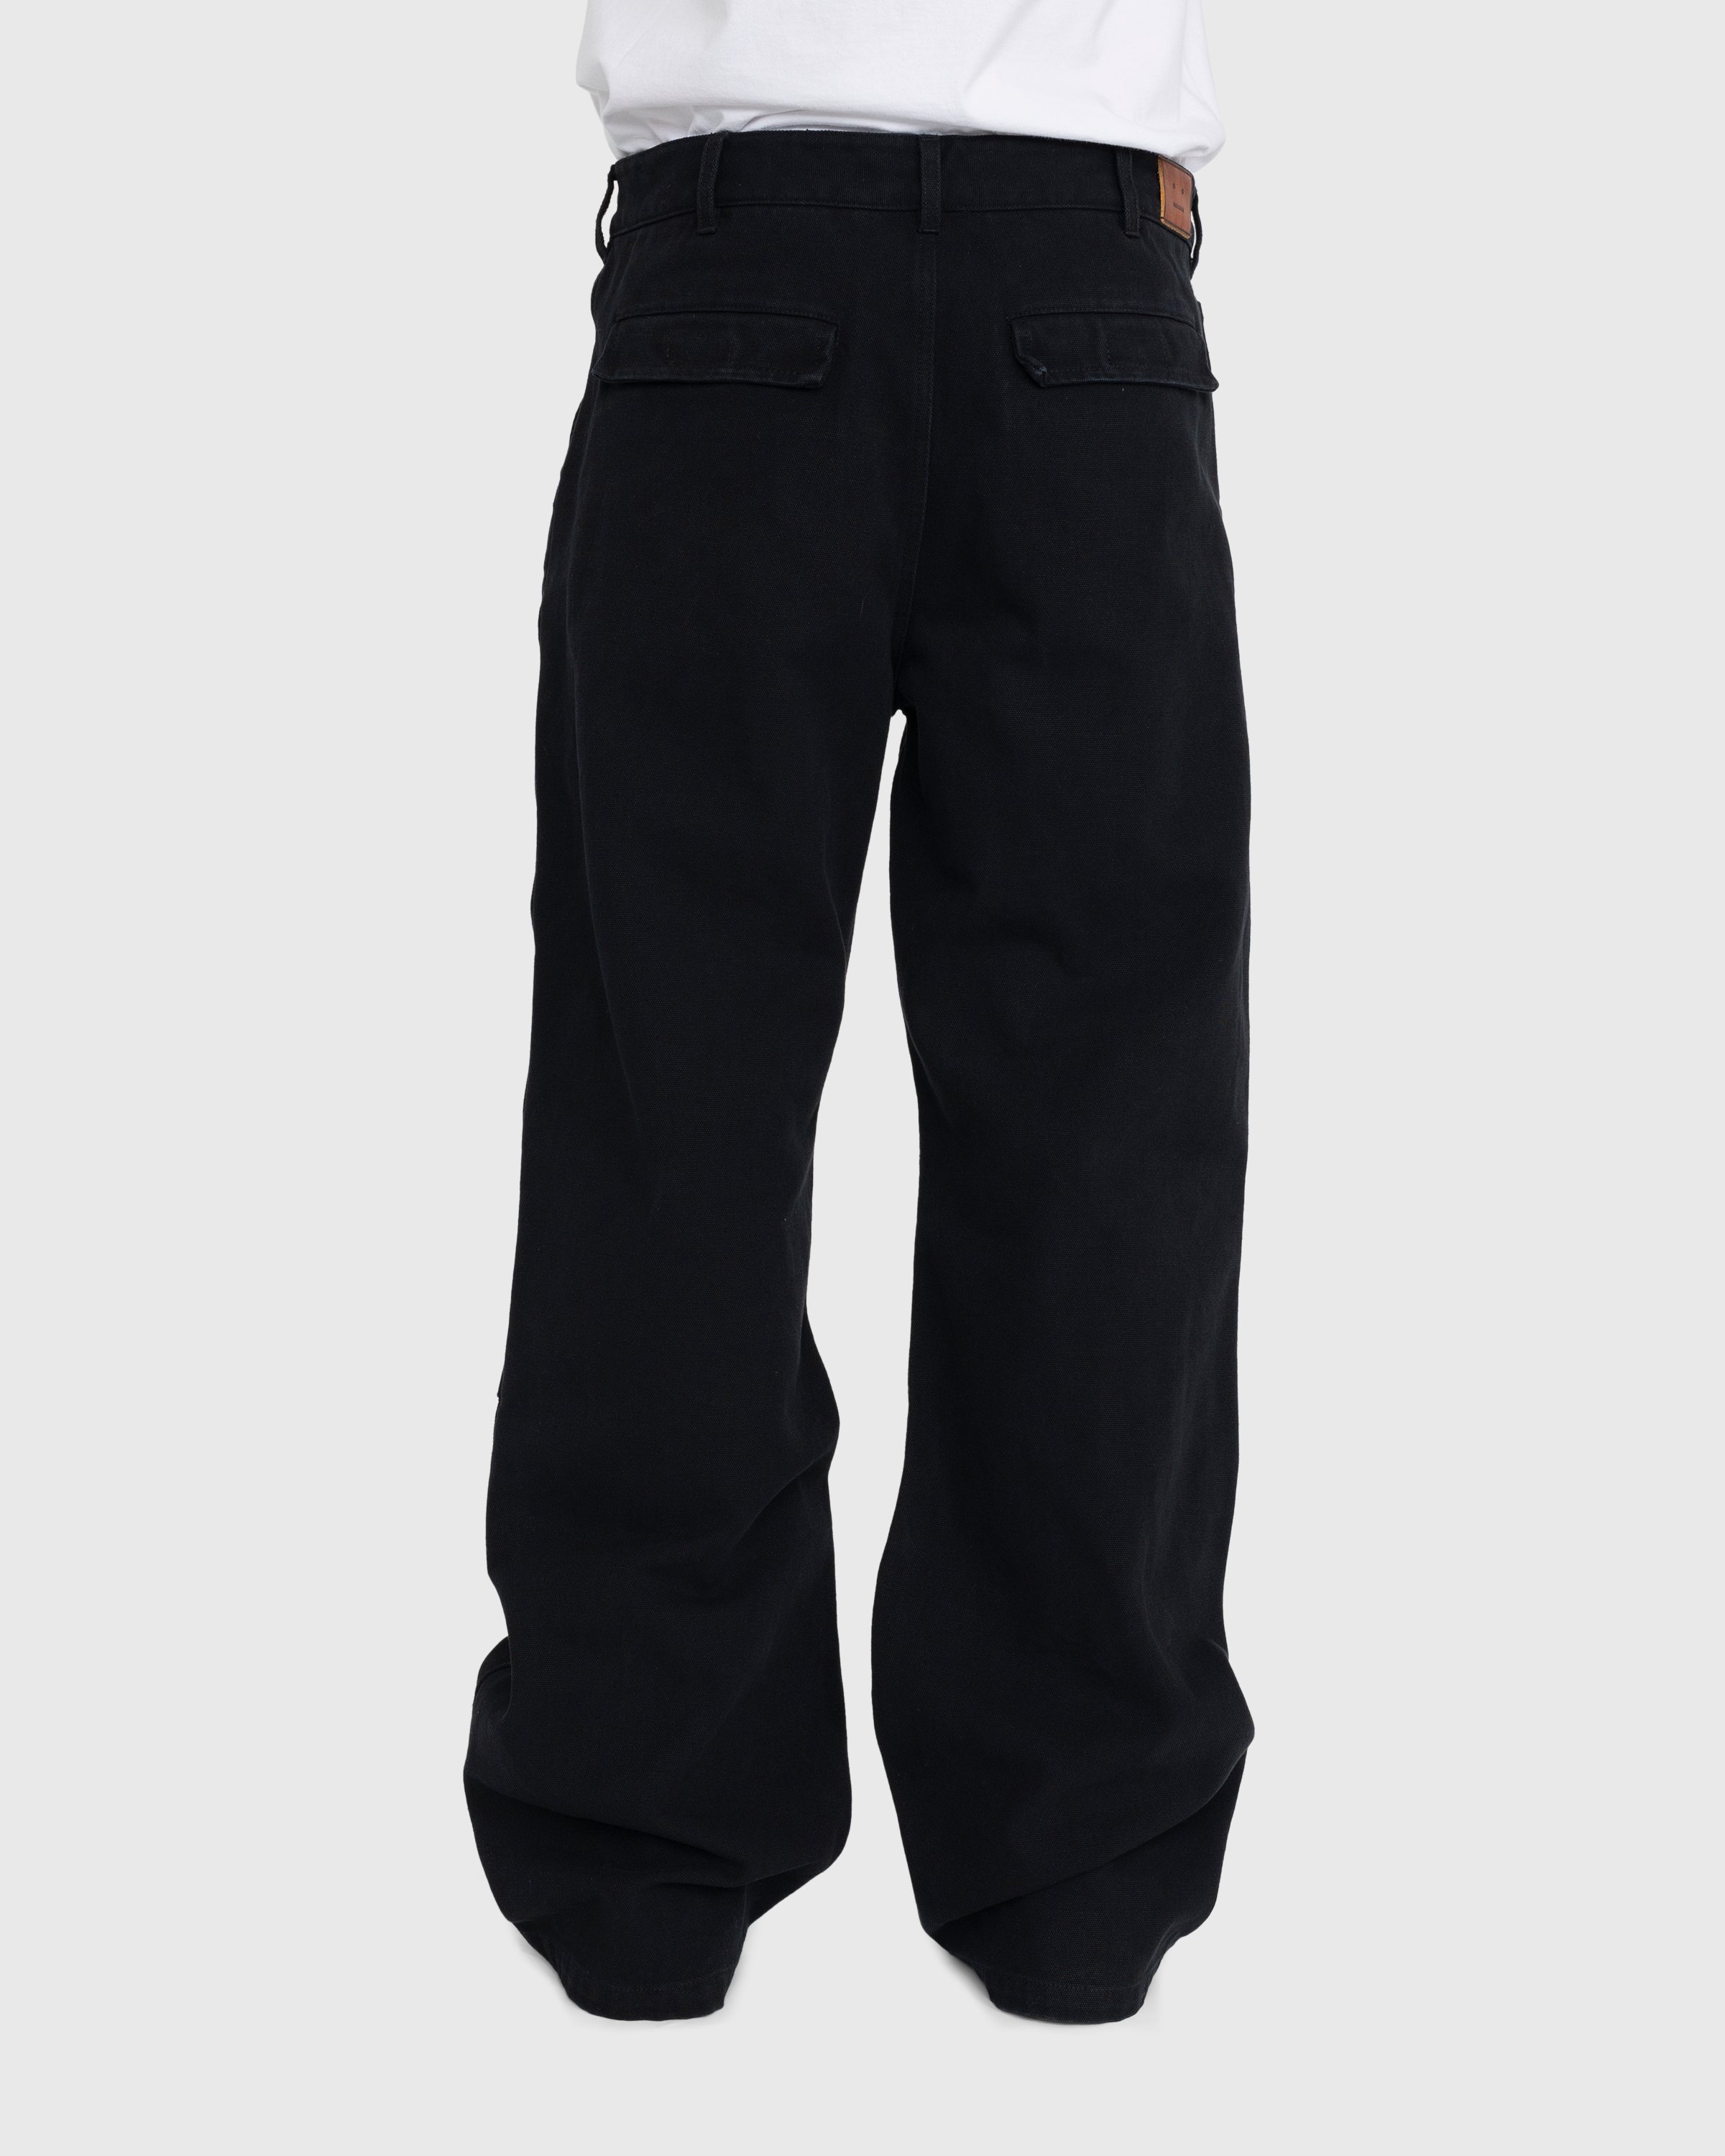 Acne Studios - Cotton Workwear Trousers Black - Clothing - Black - Image 4